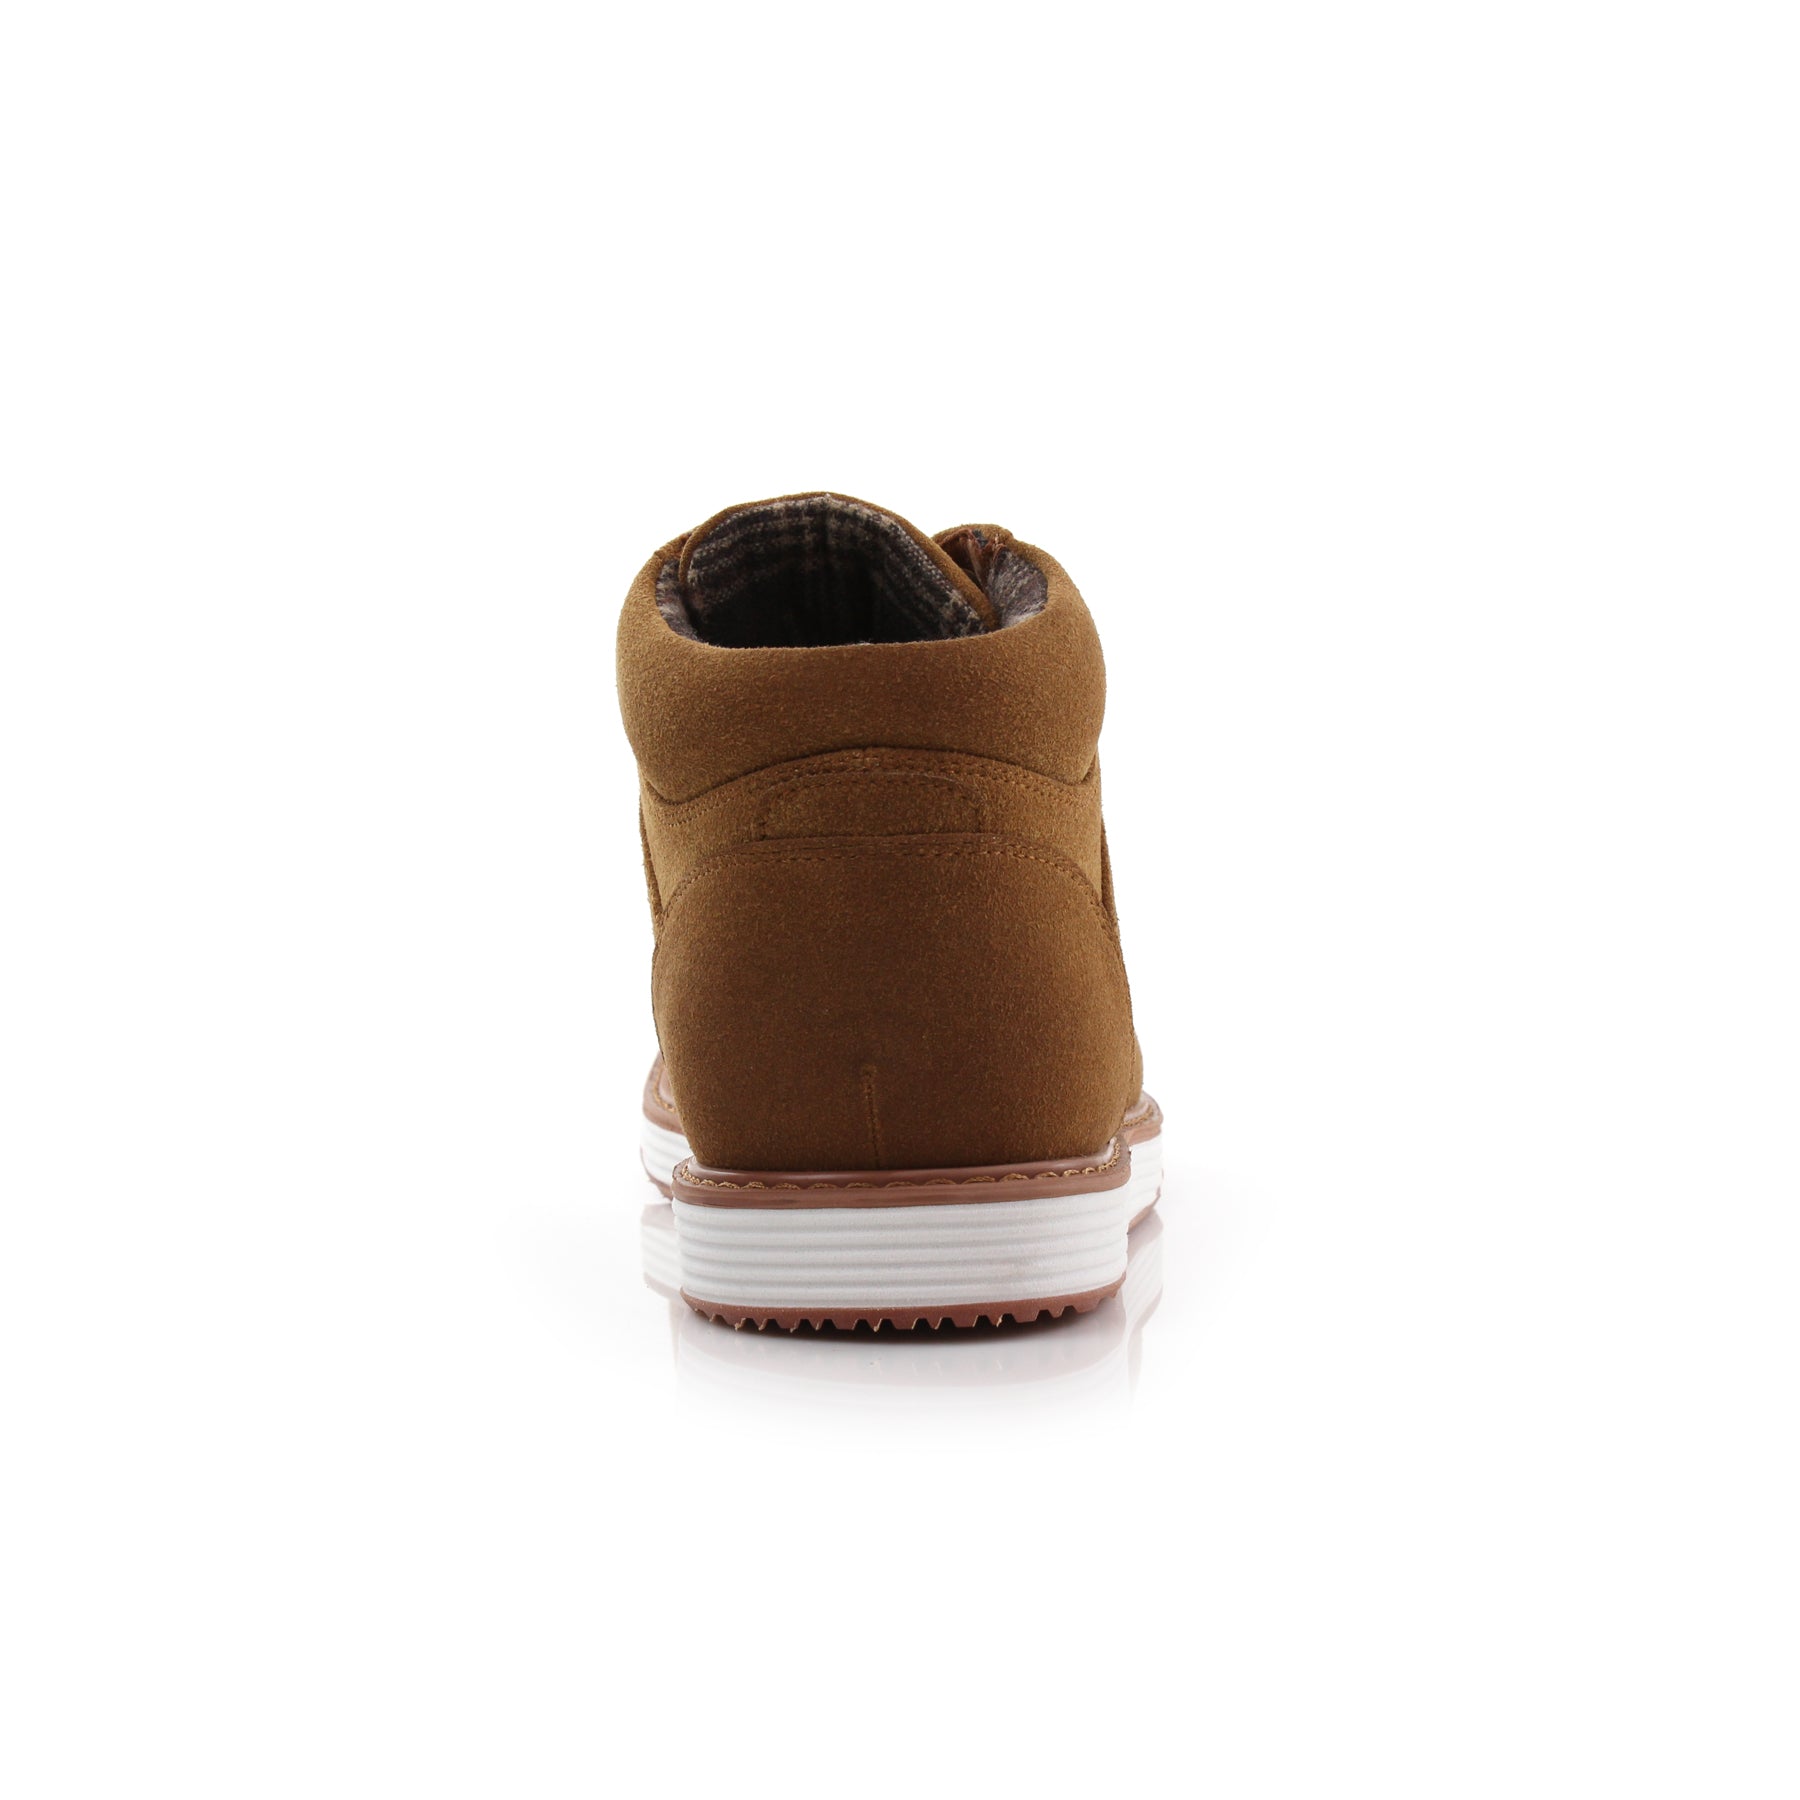 Suede Sneakers | Jax by Ferro Aldo | Conal Footwear | Back Angle View